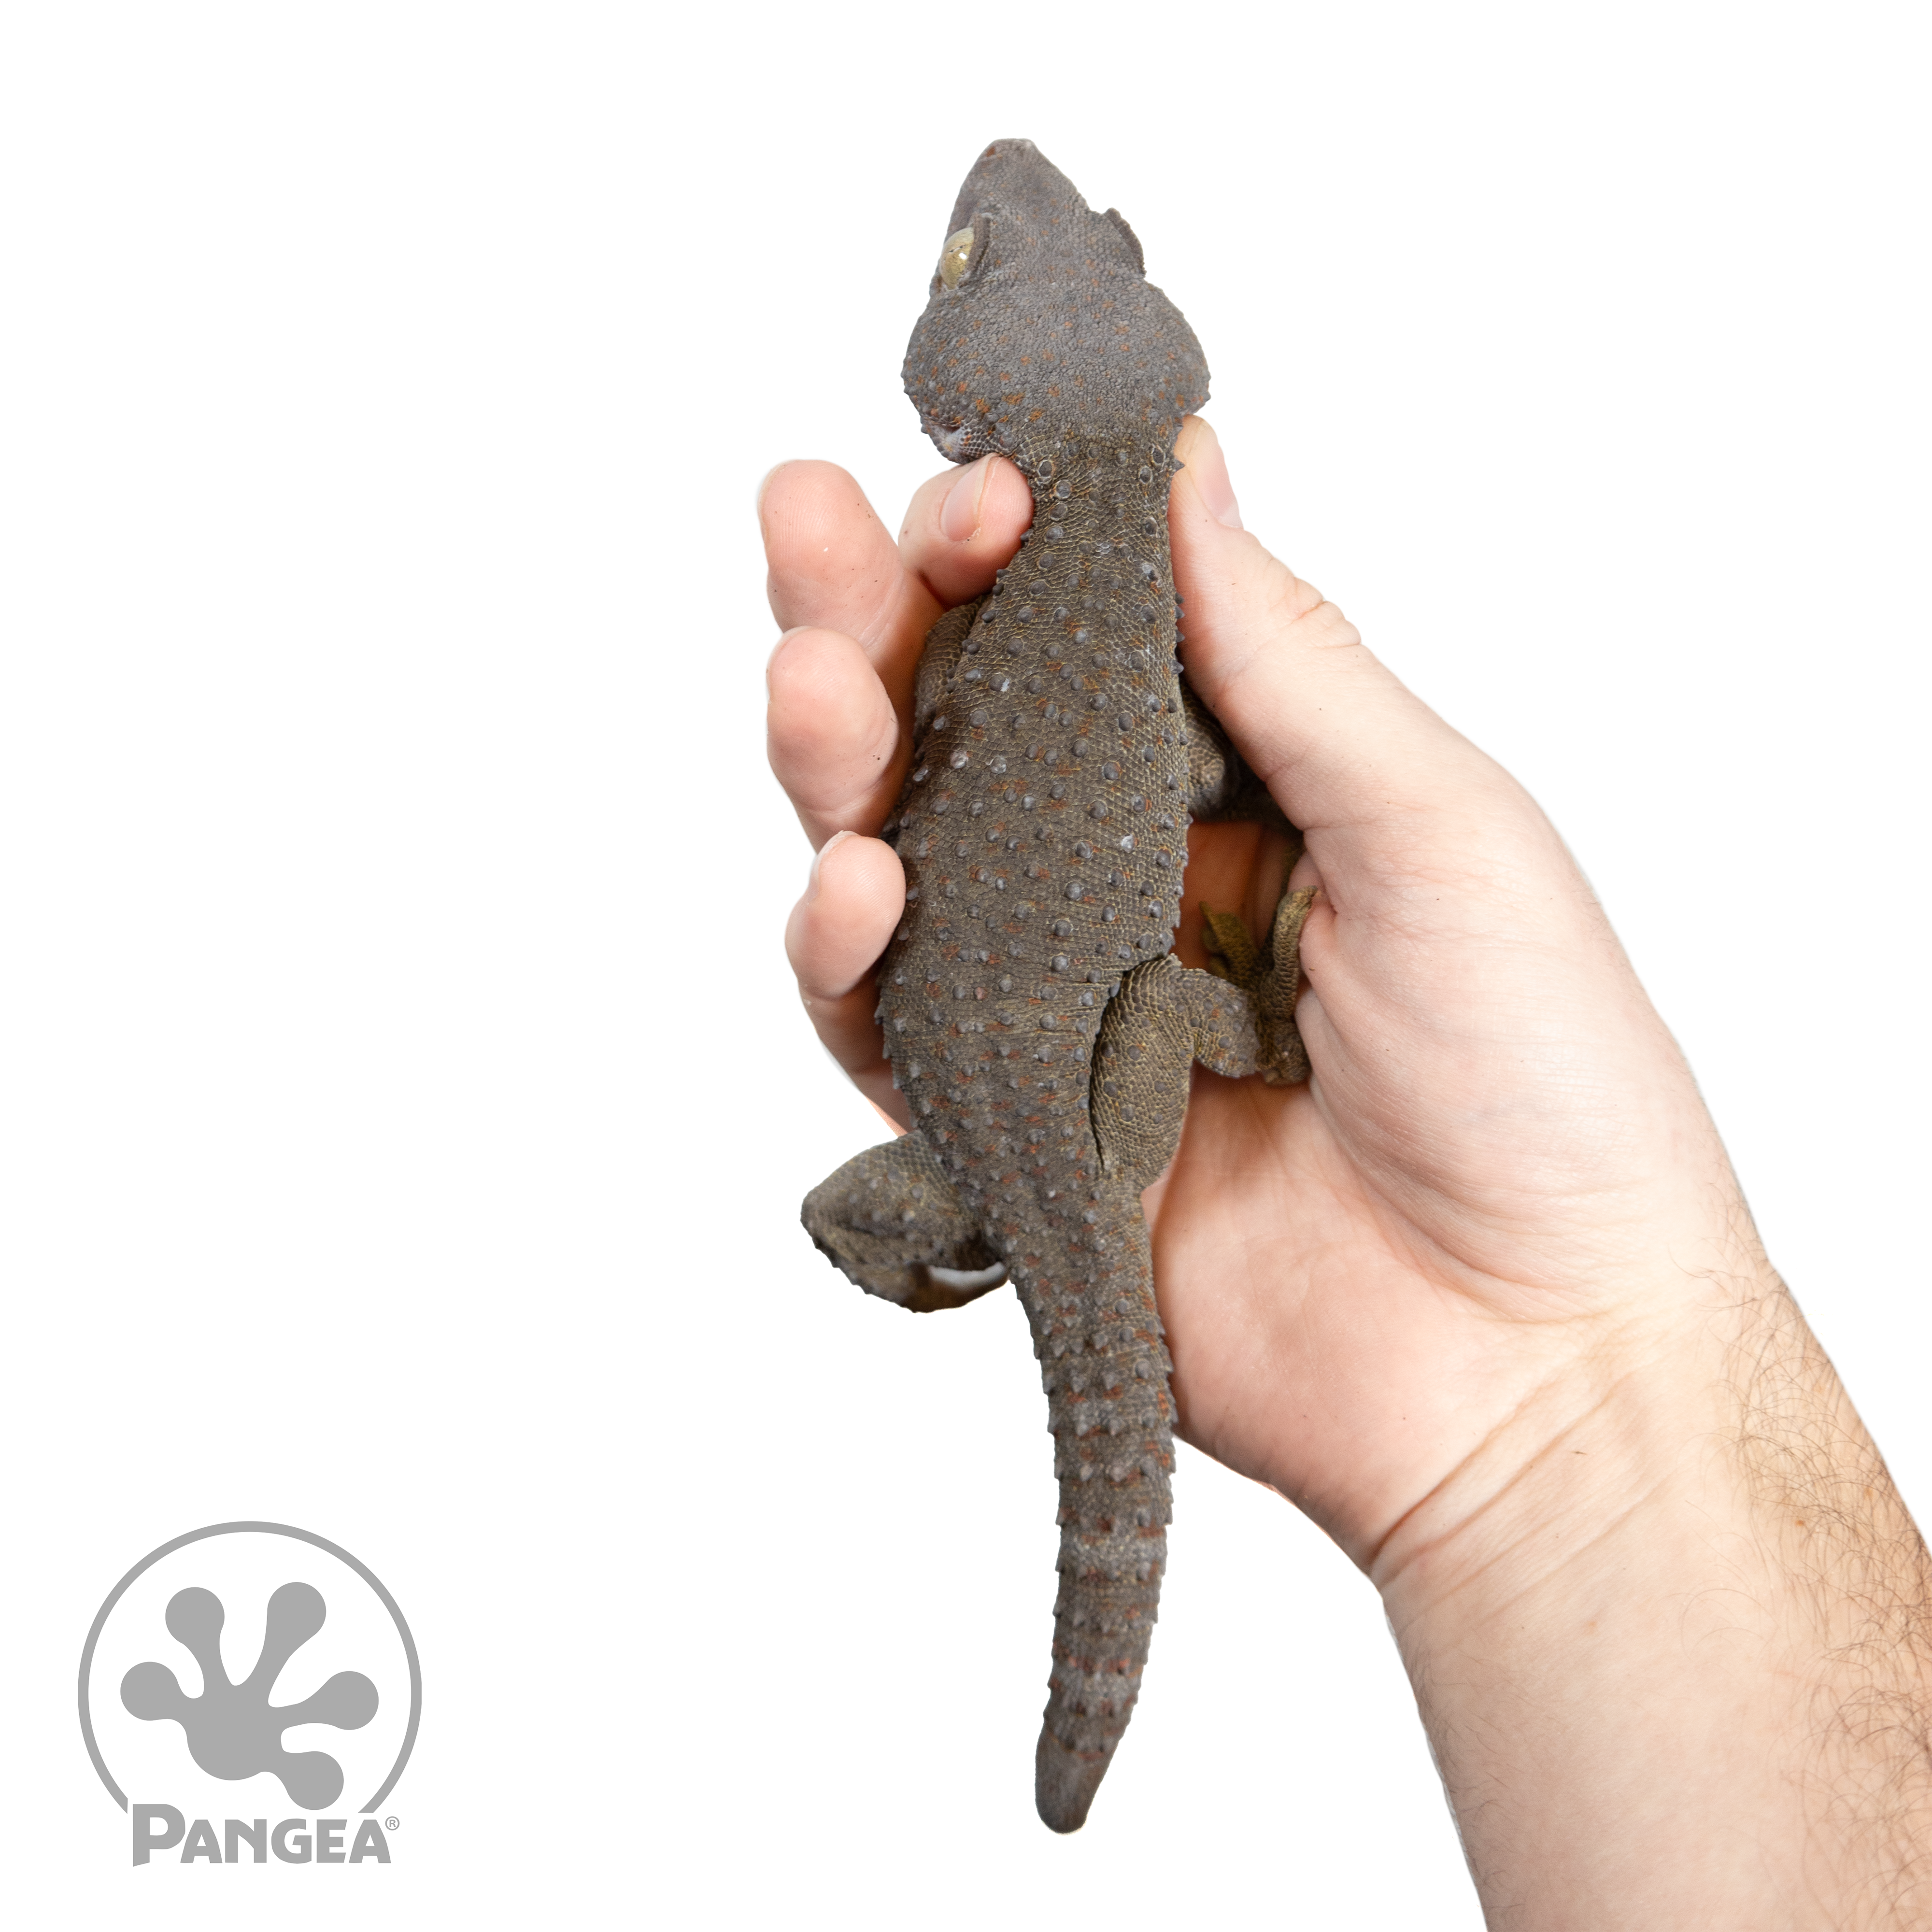 Tokay gecko ( Gekko gecko ) active and passive toe pad drying patterns.